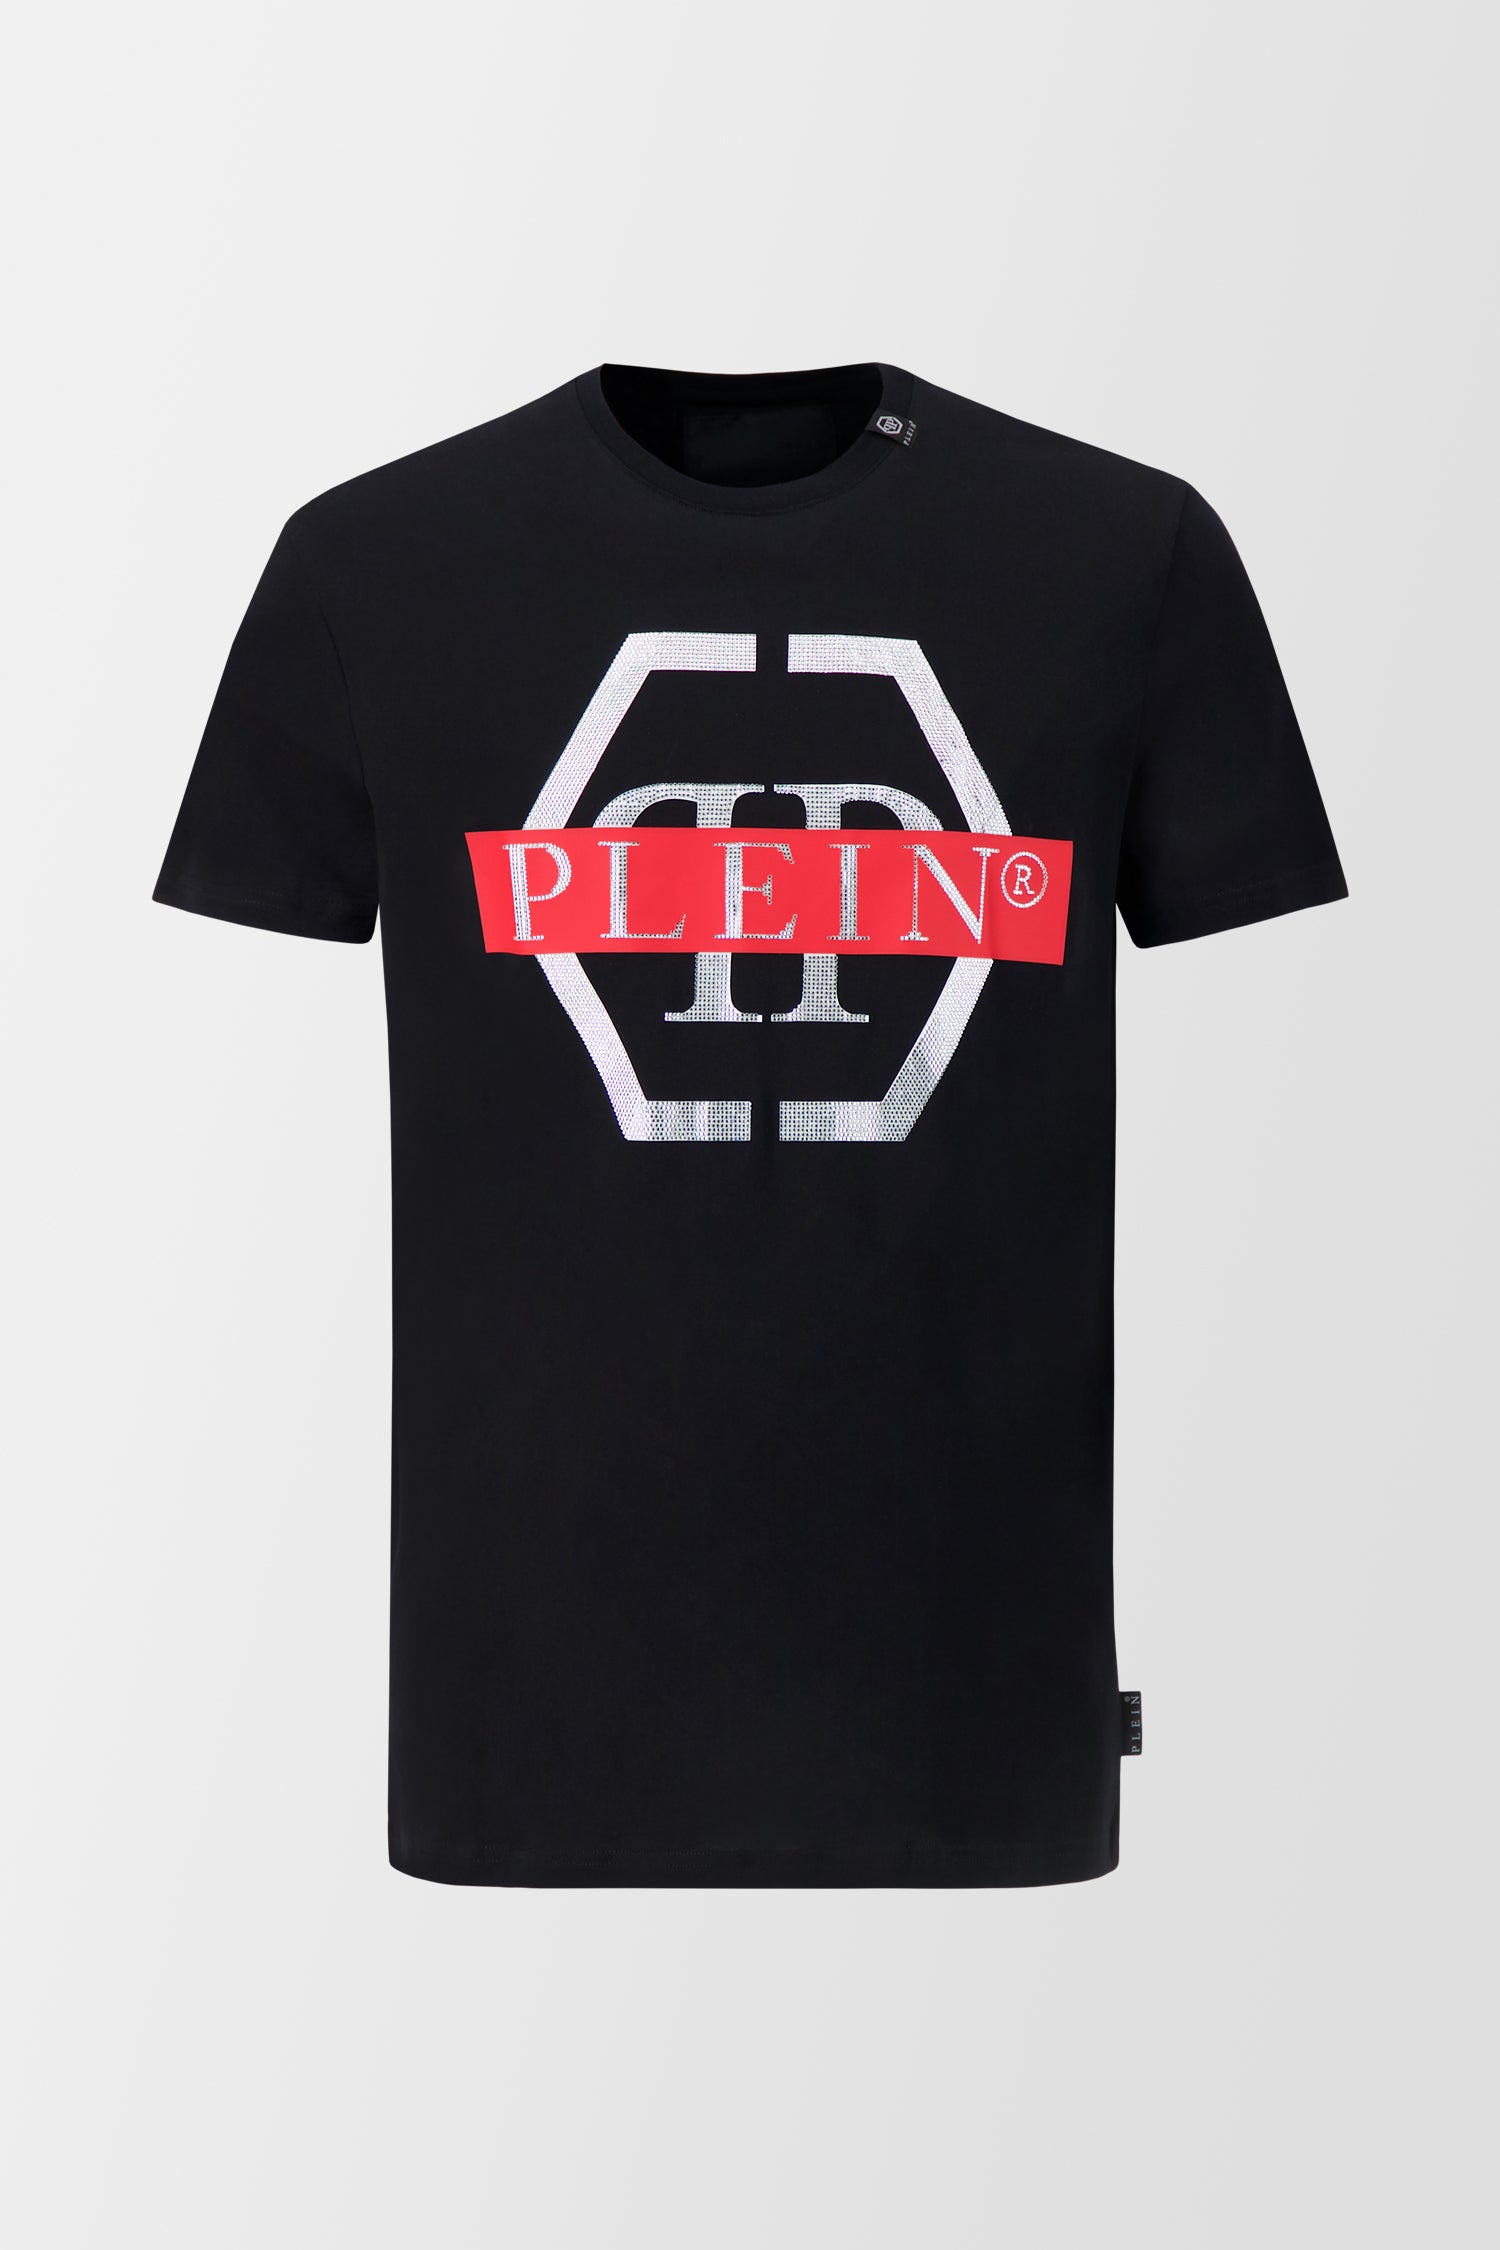 Philipp Plein Black SS Hexagon T-Shirt